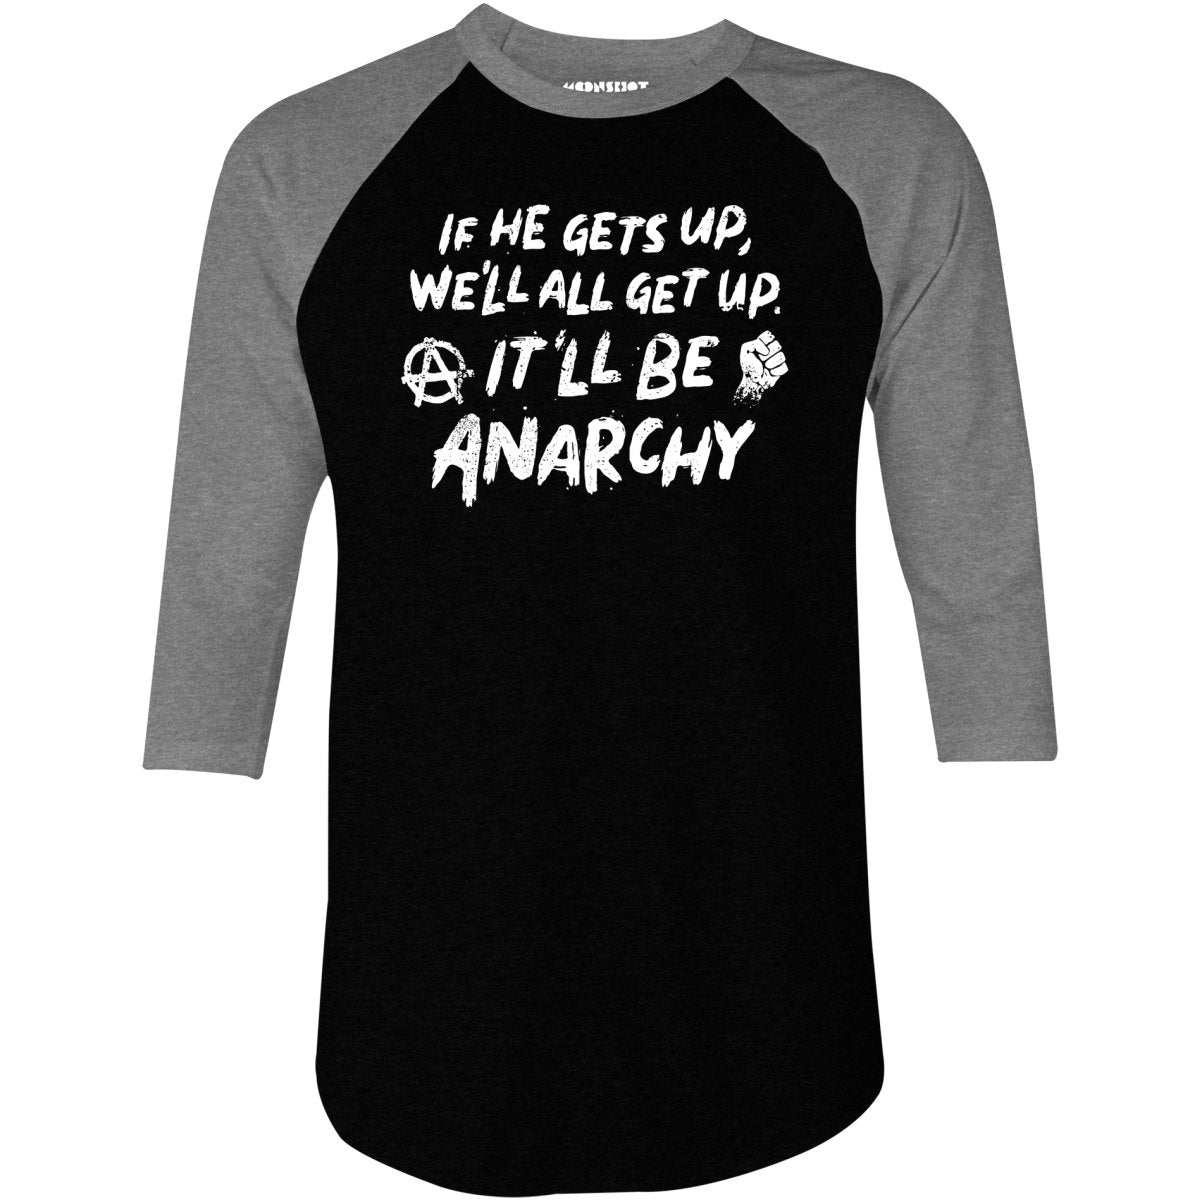 It'll Be Anarchy - 3/4 Sleeve Raglan T-Shirt